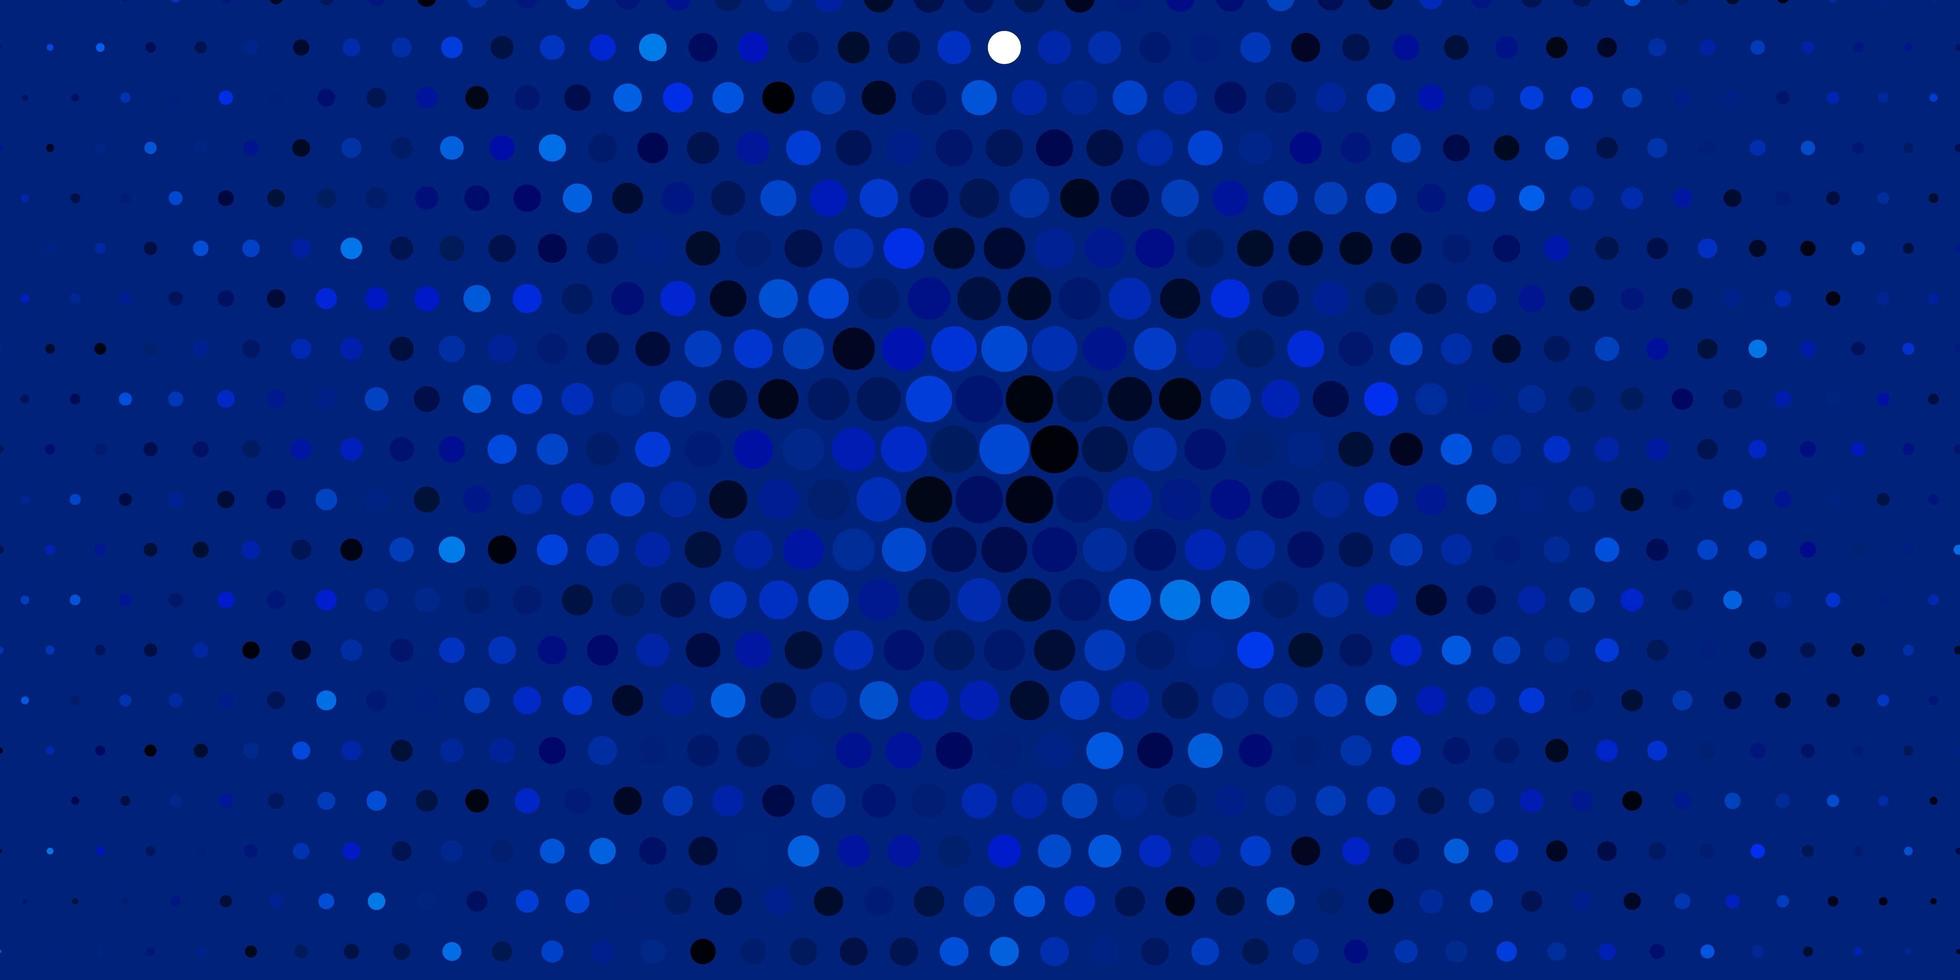 Dark BLUE vector backdrop with circles